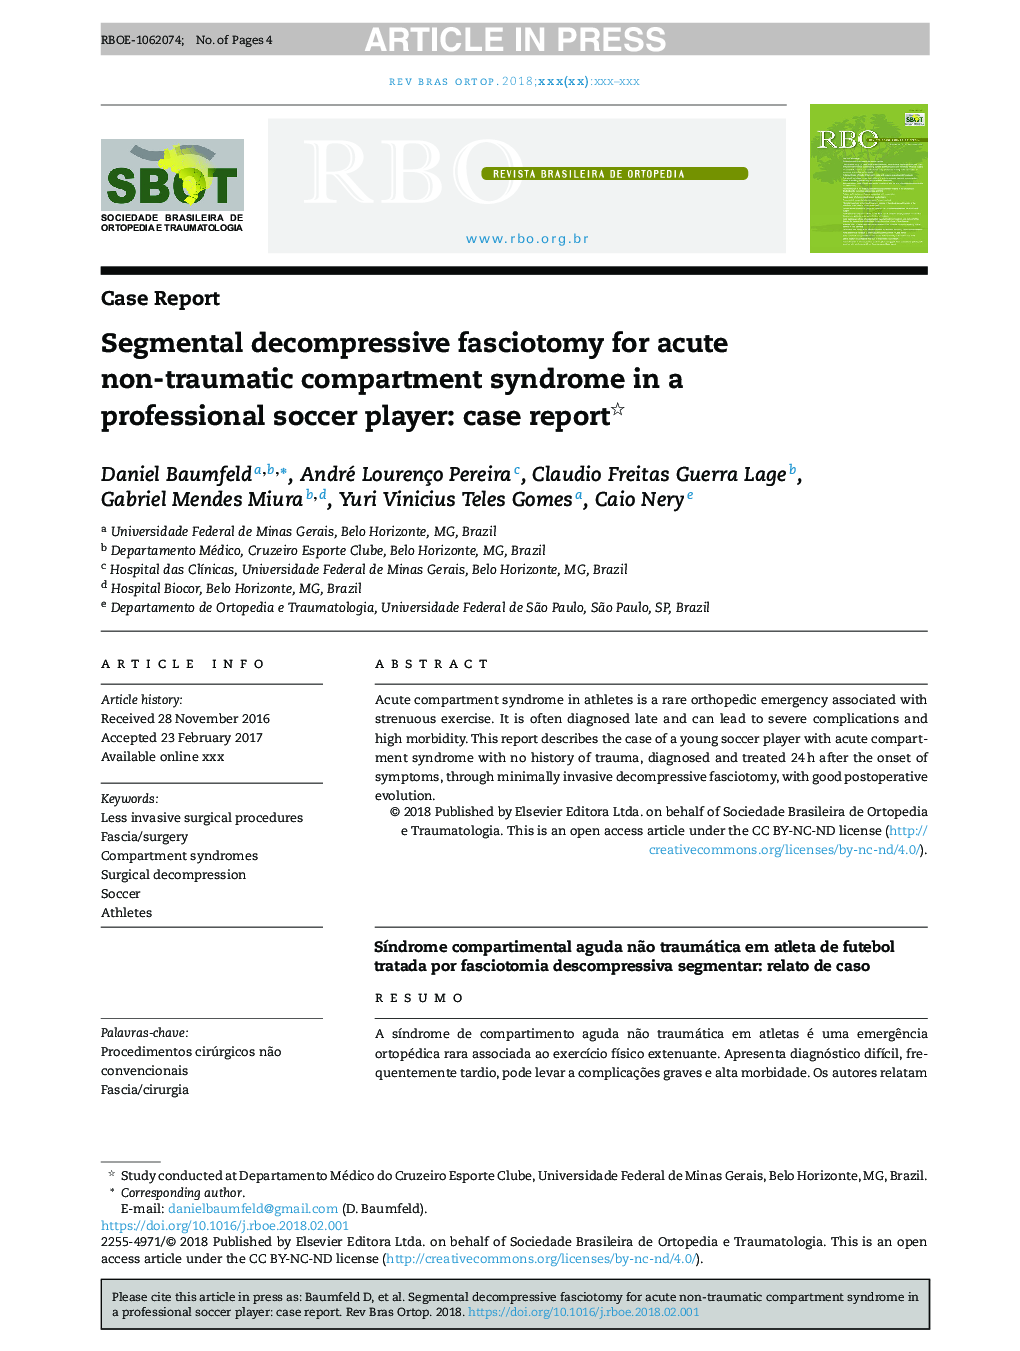 Segmental decompressive fasciotomy for acute non-traumatic compartment syndrome in a professional soccer player: case report